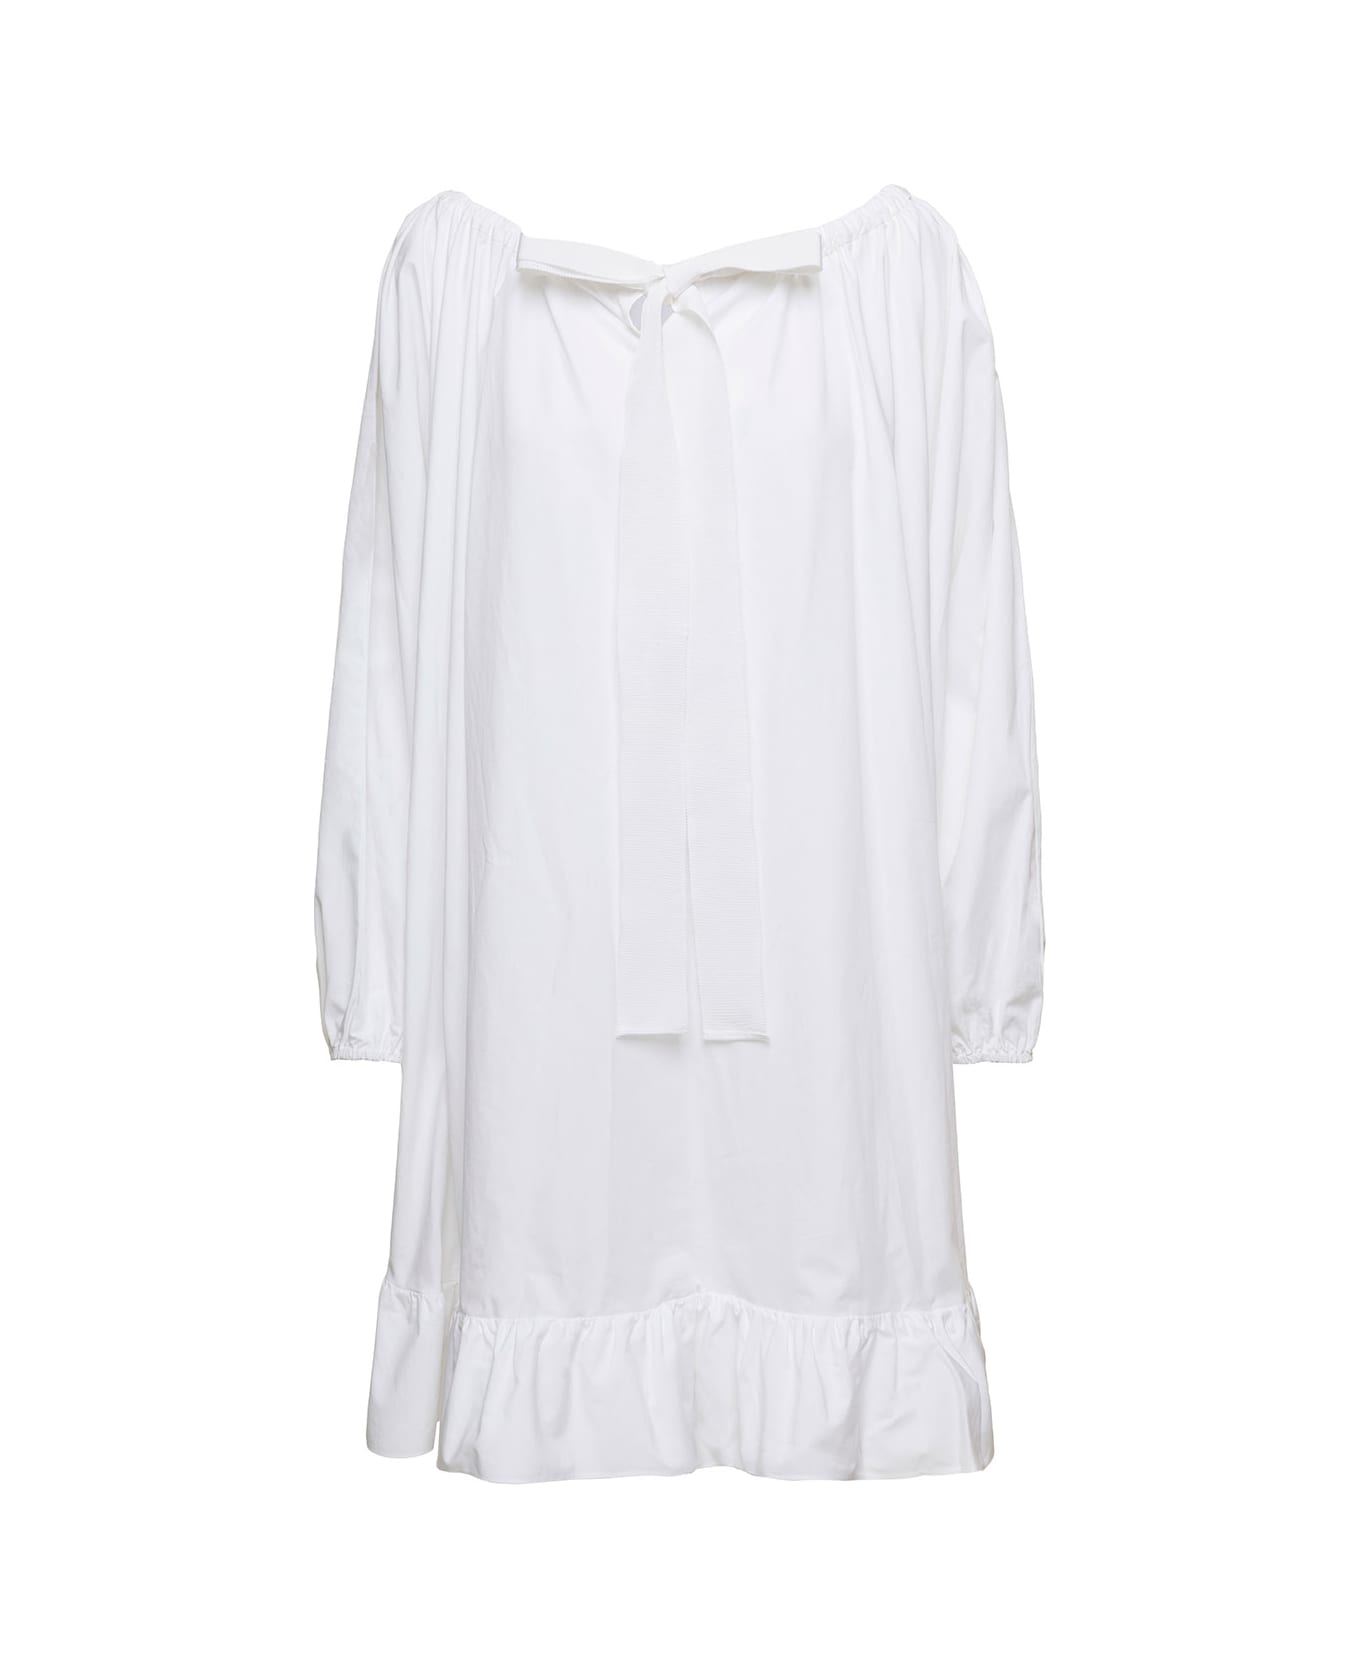 Patou Mini White Frill Dress With Bow Detail In Cotton Woman - White